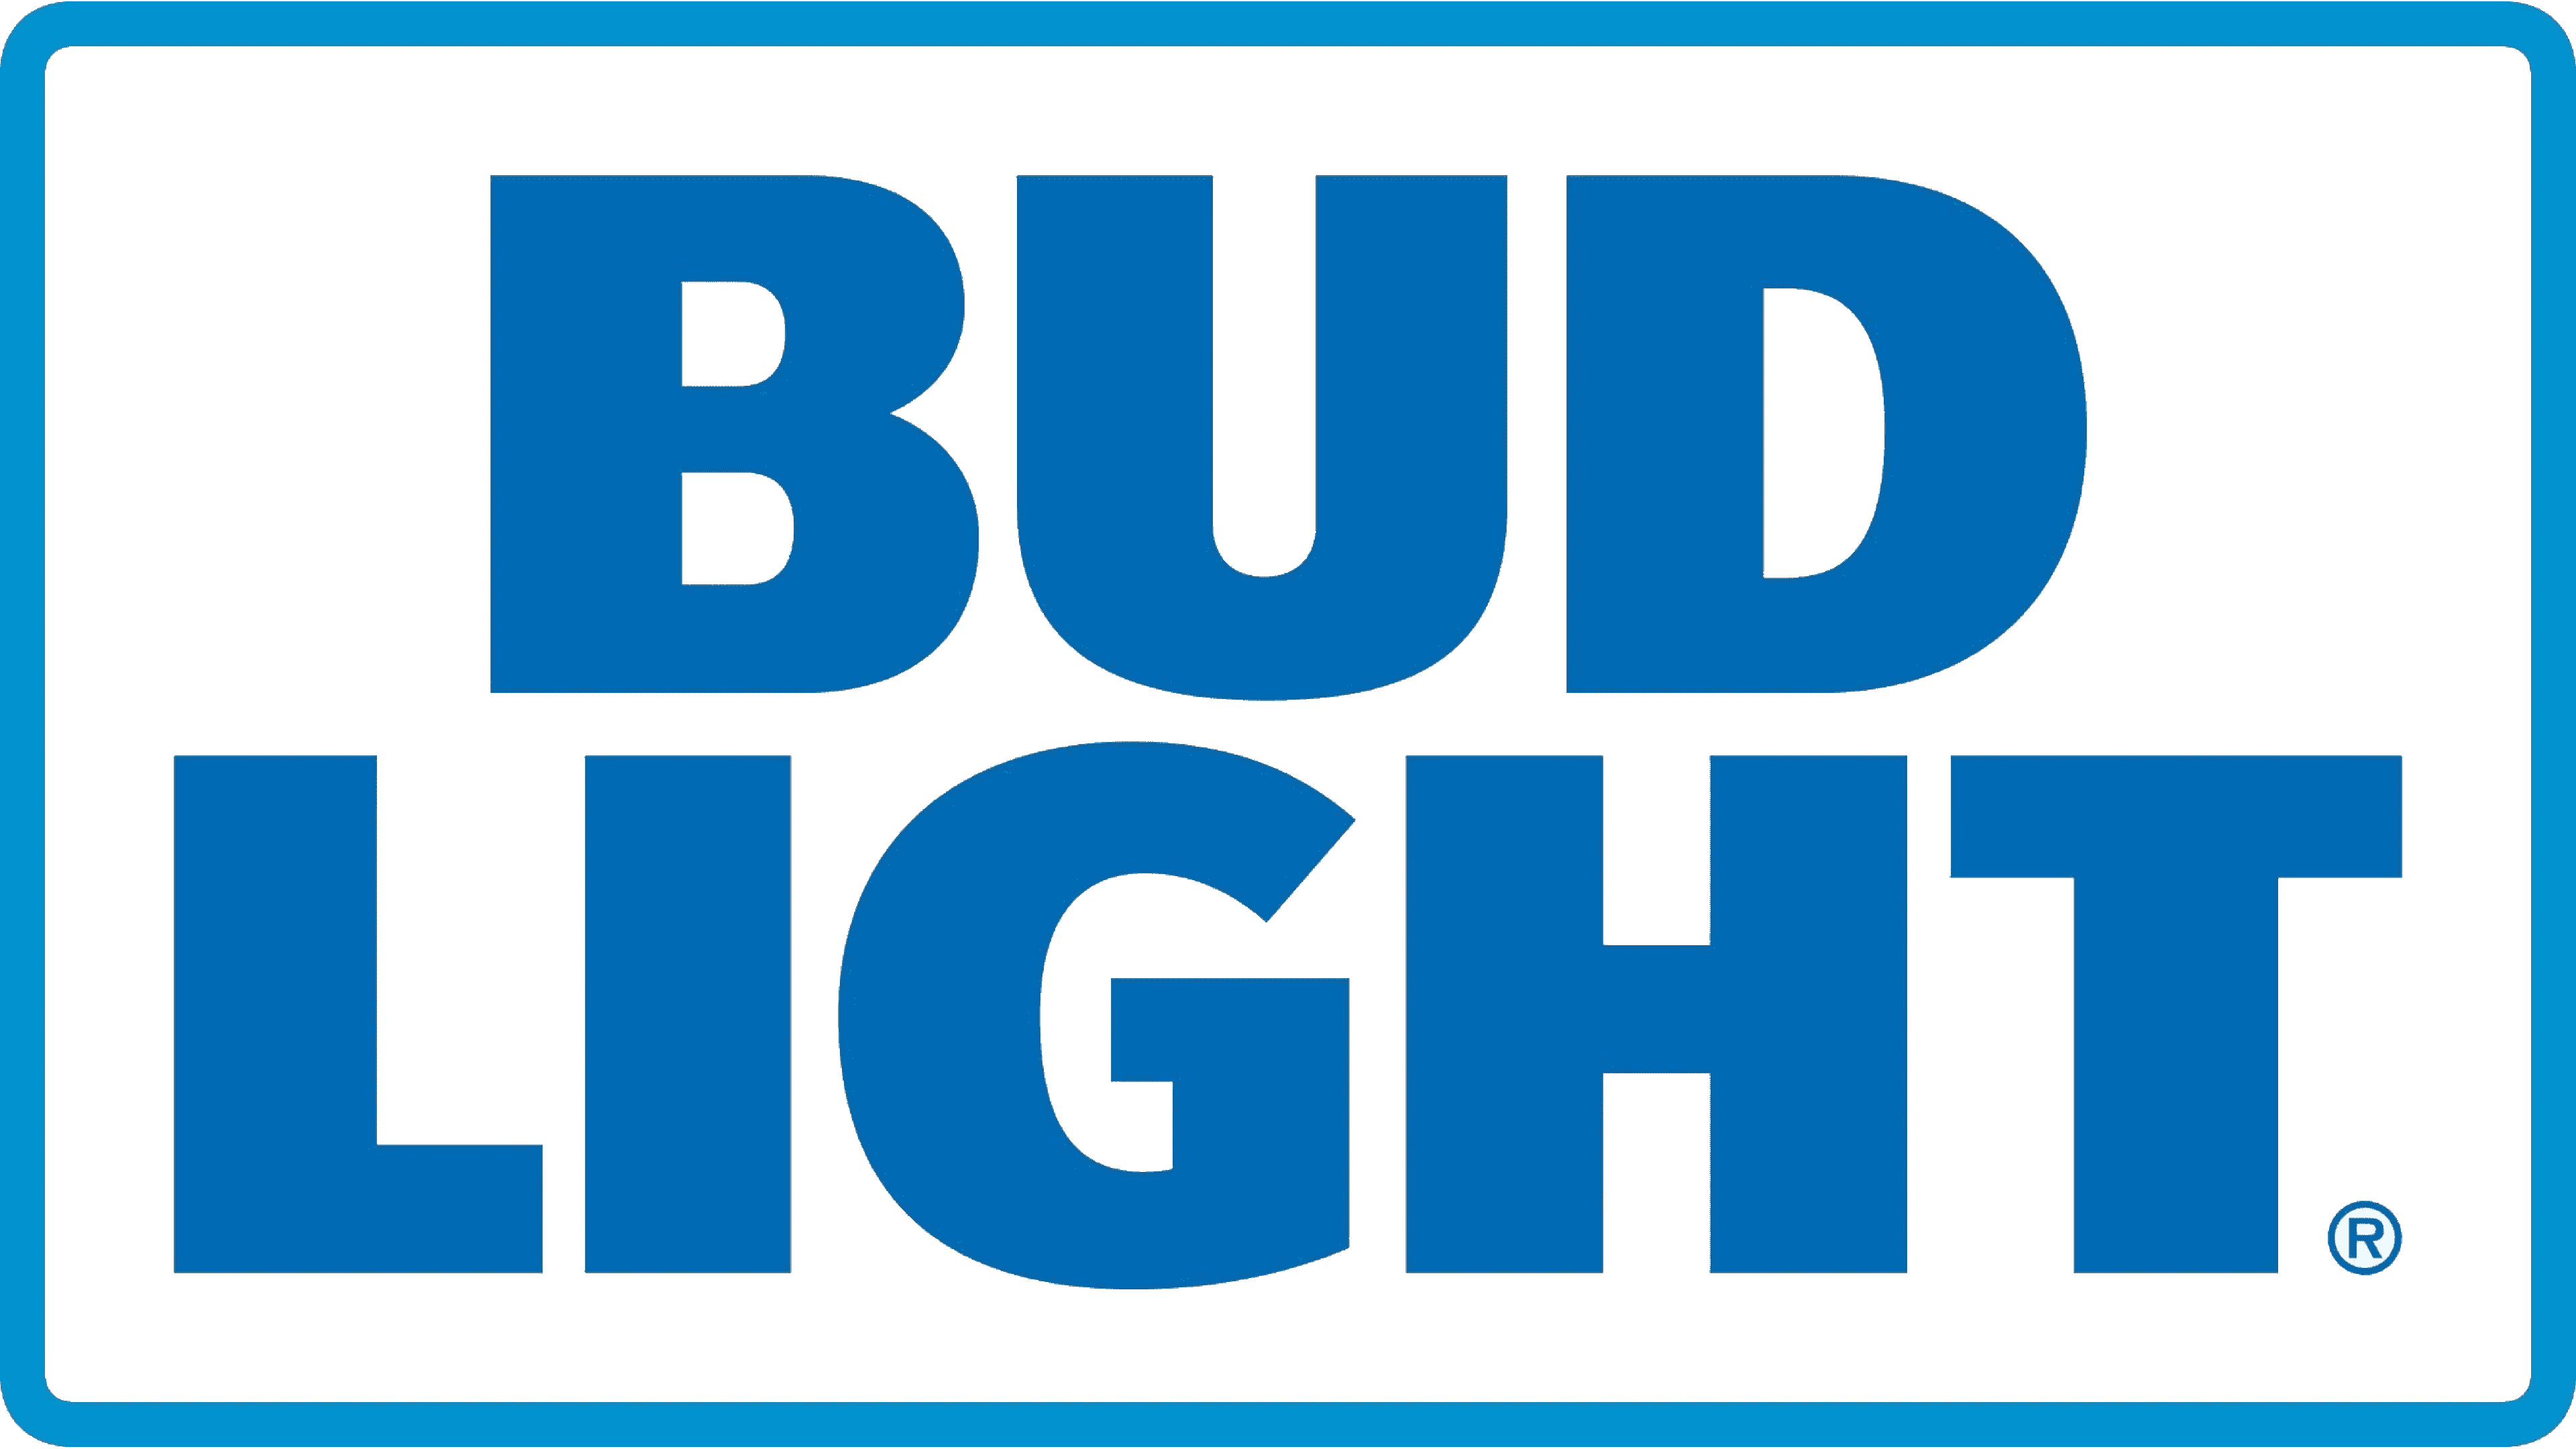 Bud Light Budweiser Brewing Group UK&I